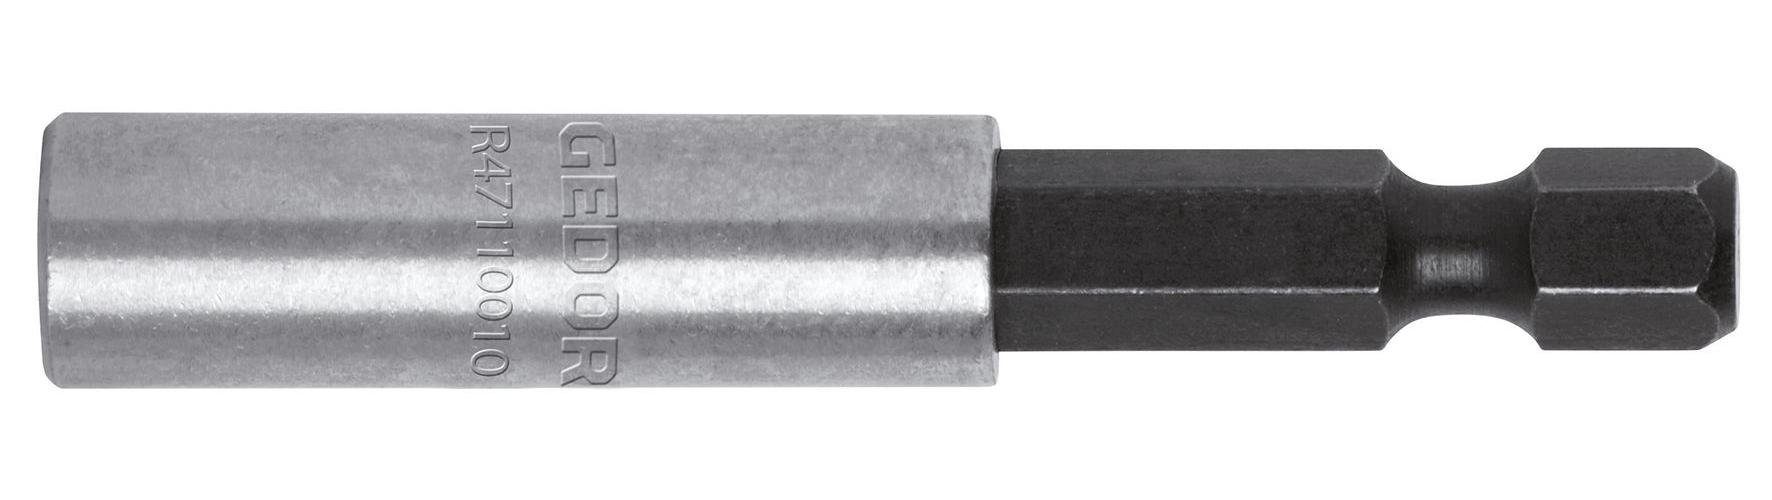 Gedore Red 6-kant 1/4 6-kant 1/4 magnetisch Ratschenringschlüssel Bithalter R47110014 x mm 75